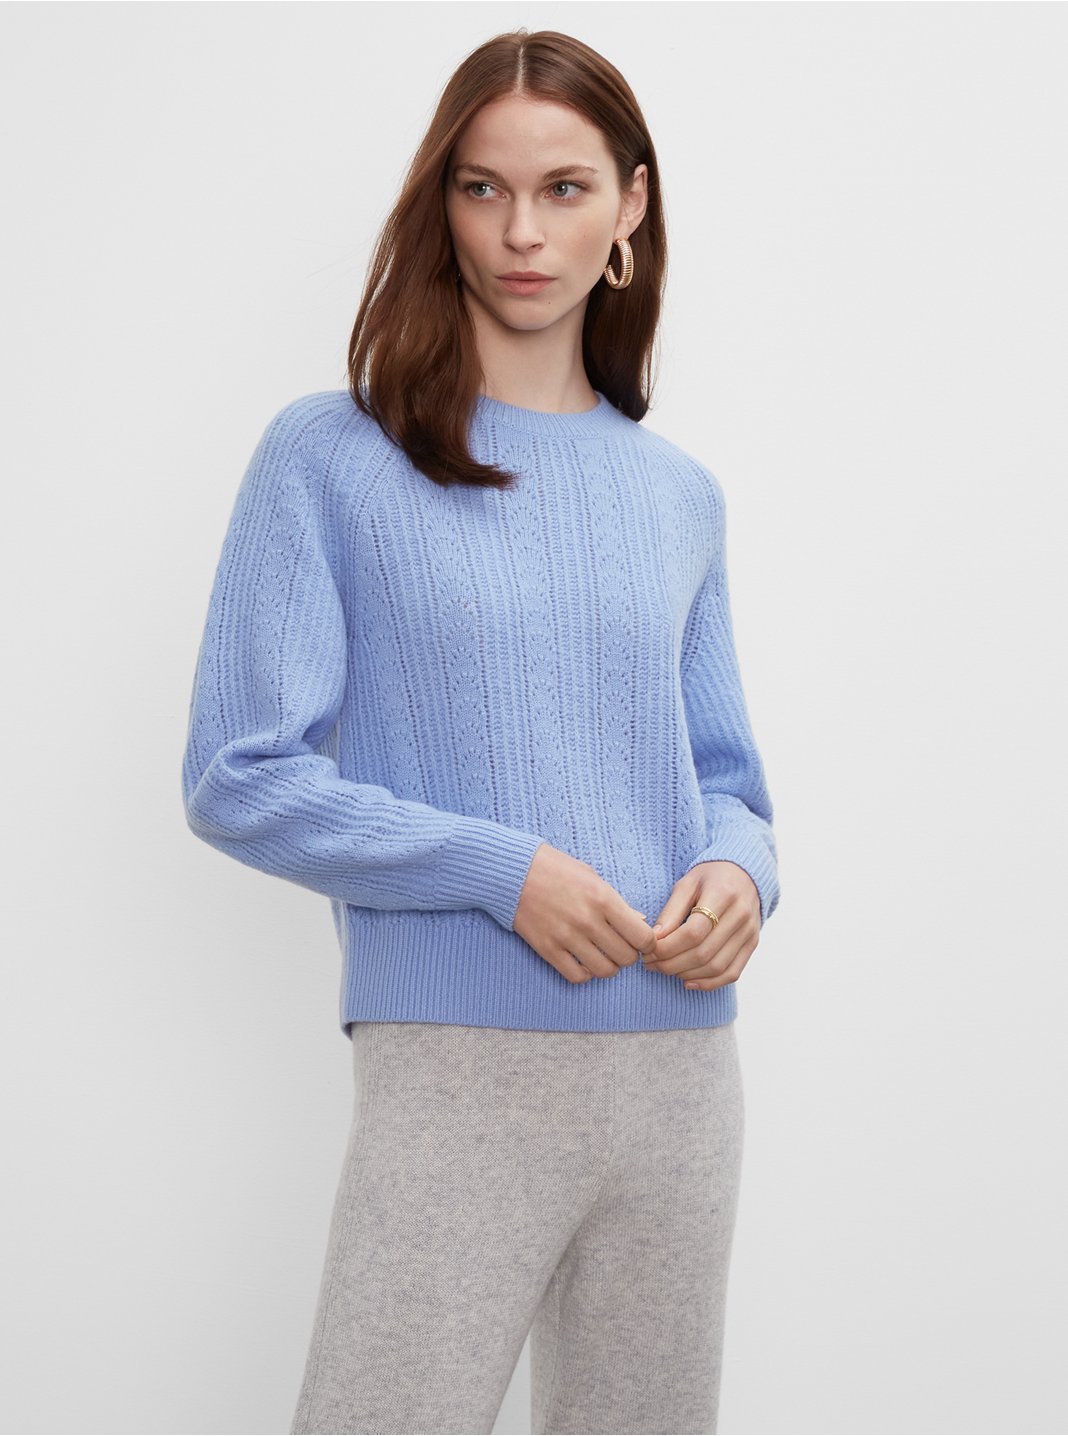 Clubmonaco Pointelle Texture Crewneck Sweater